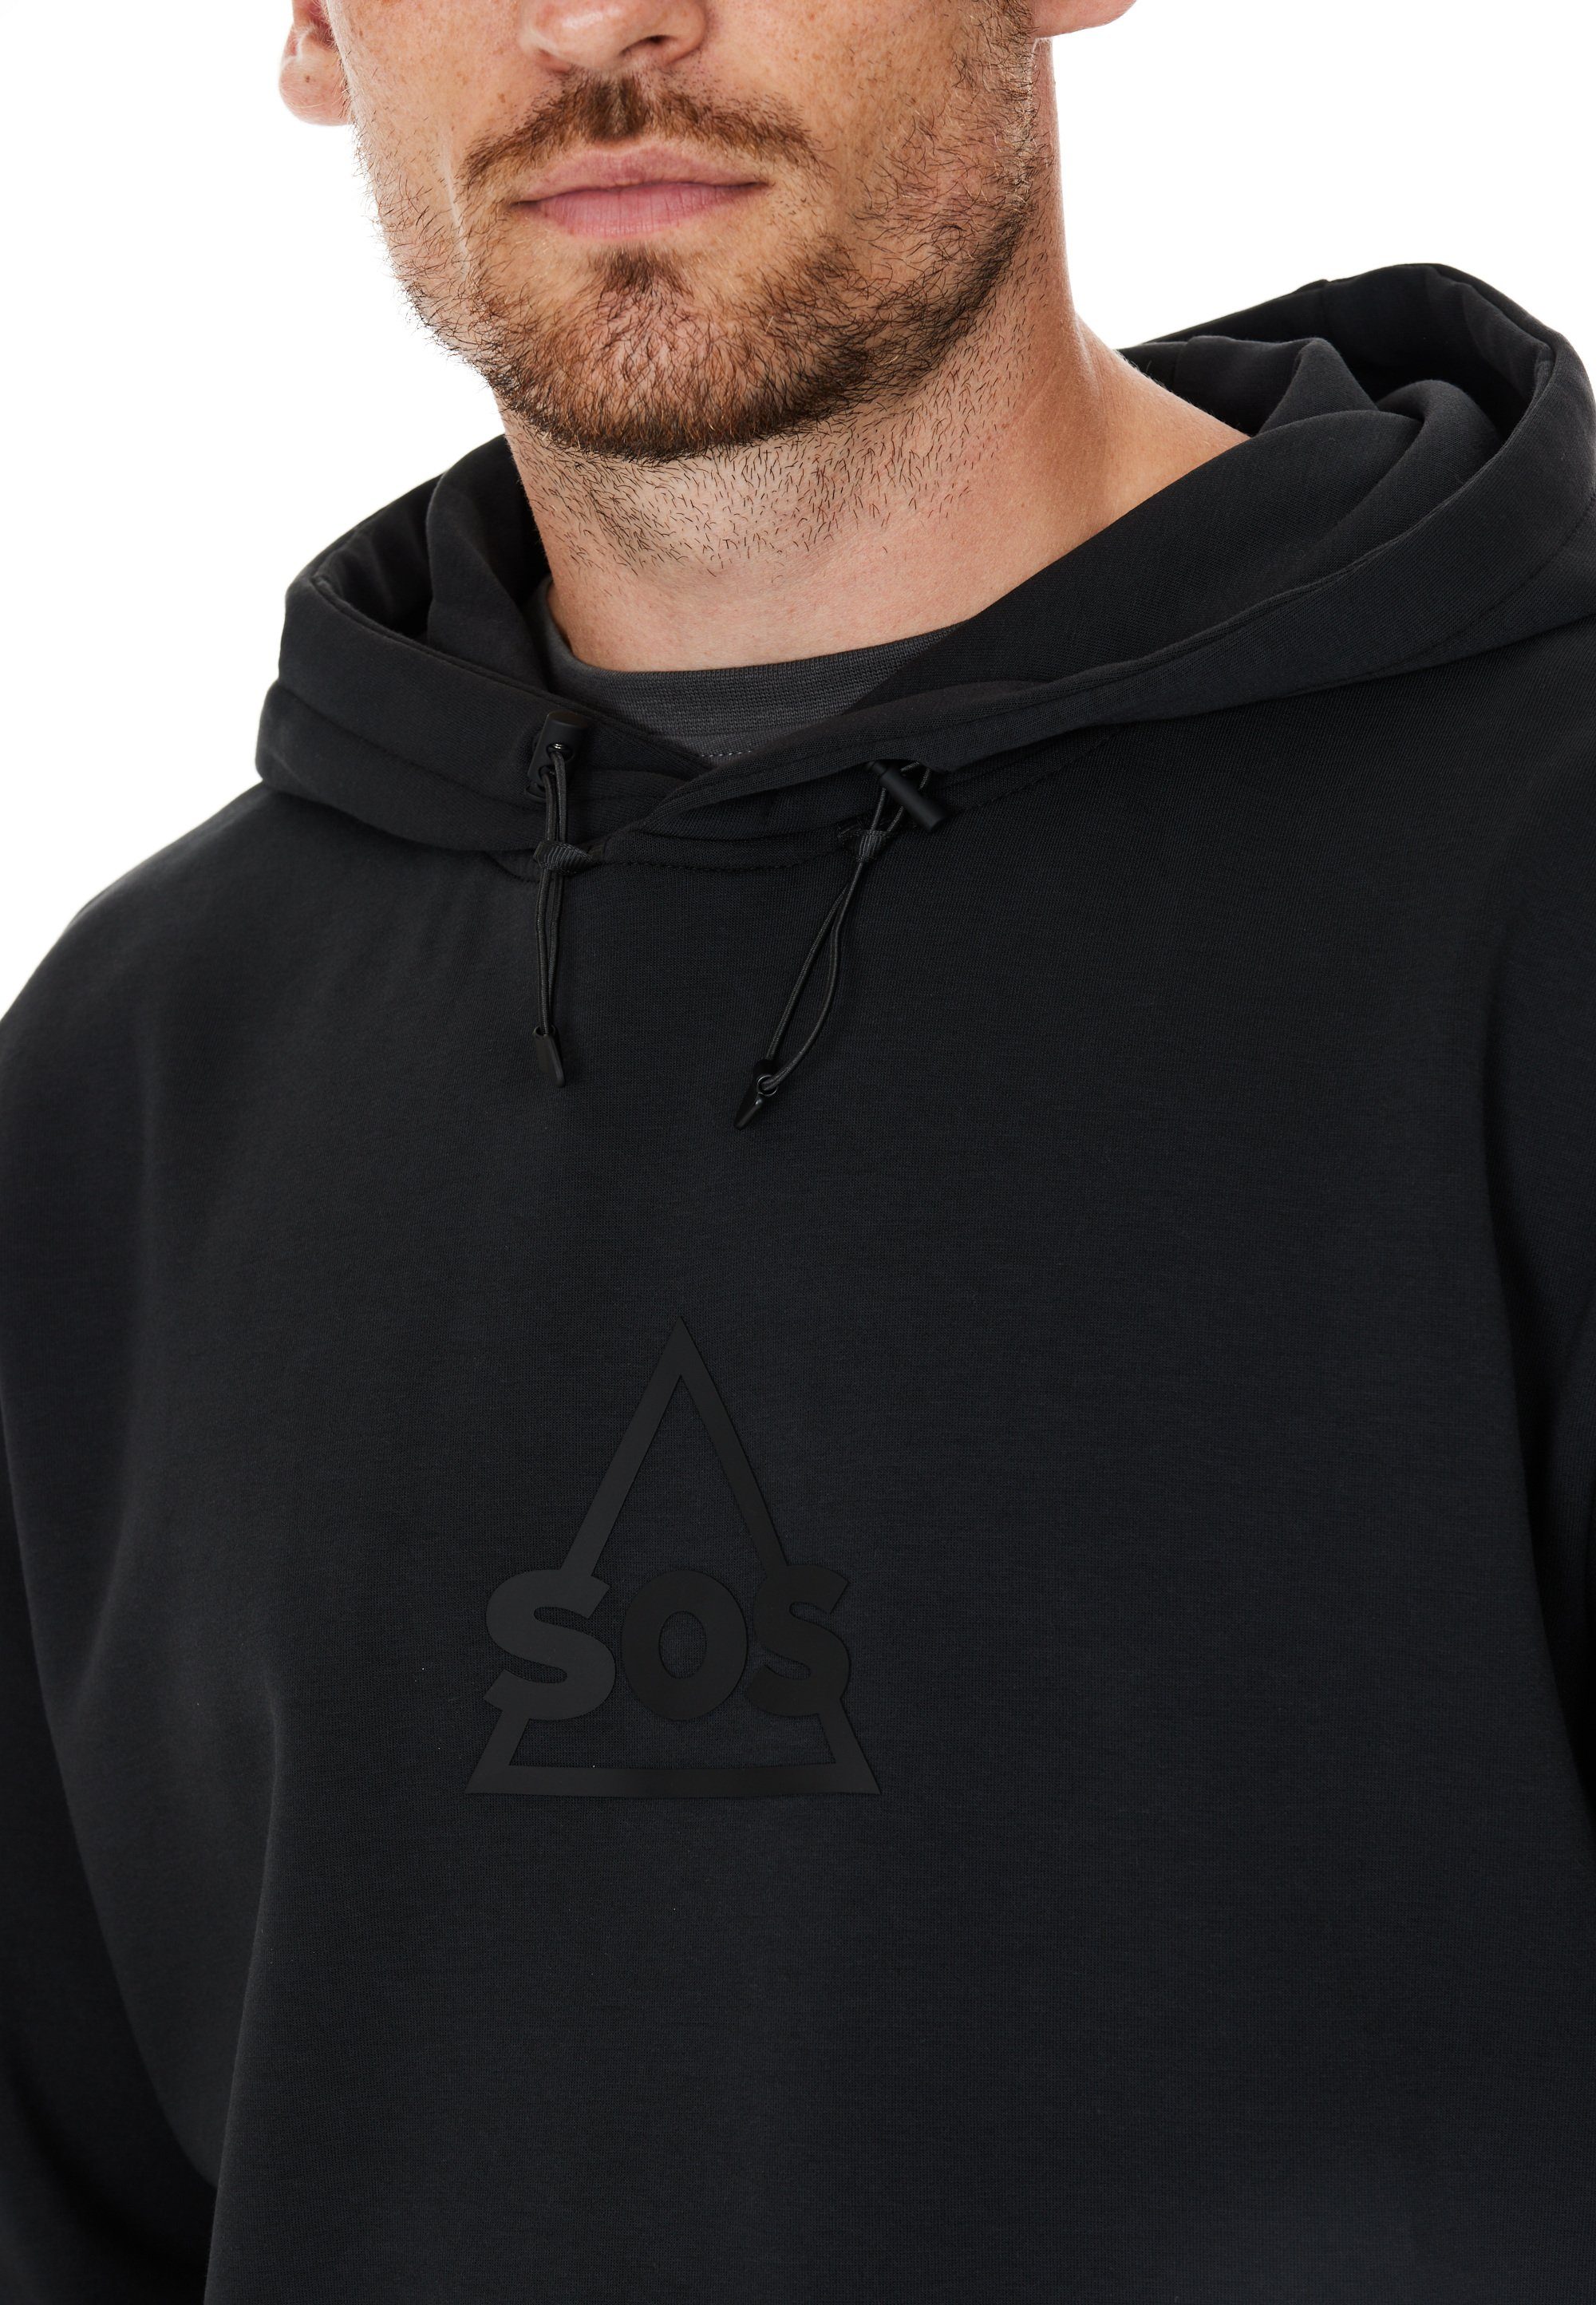 Vail wärmender SOS Kapuzensweatshirt mit Kapuze schwarz